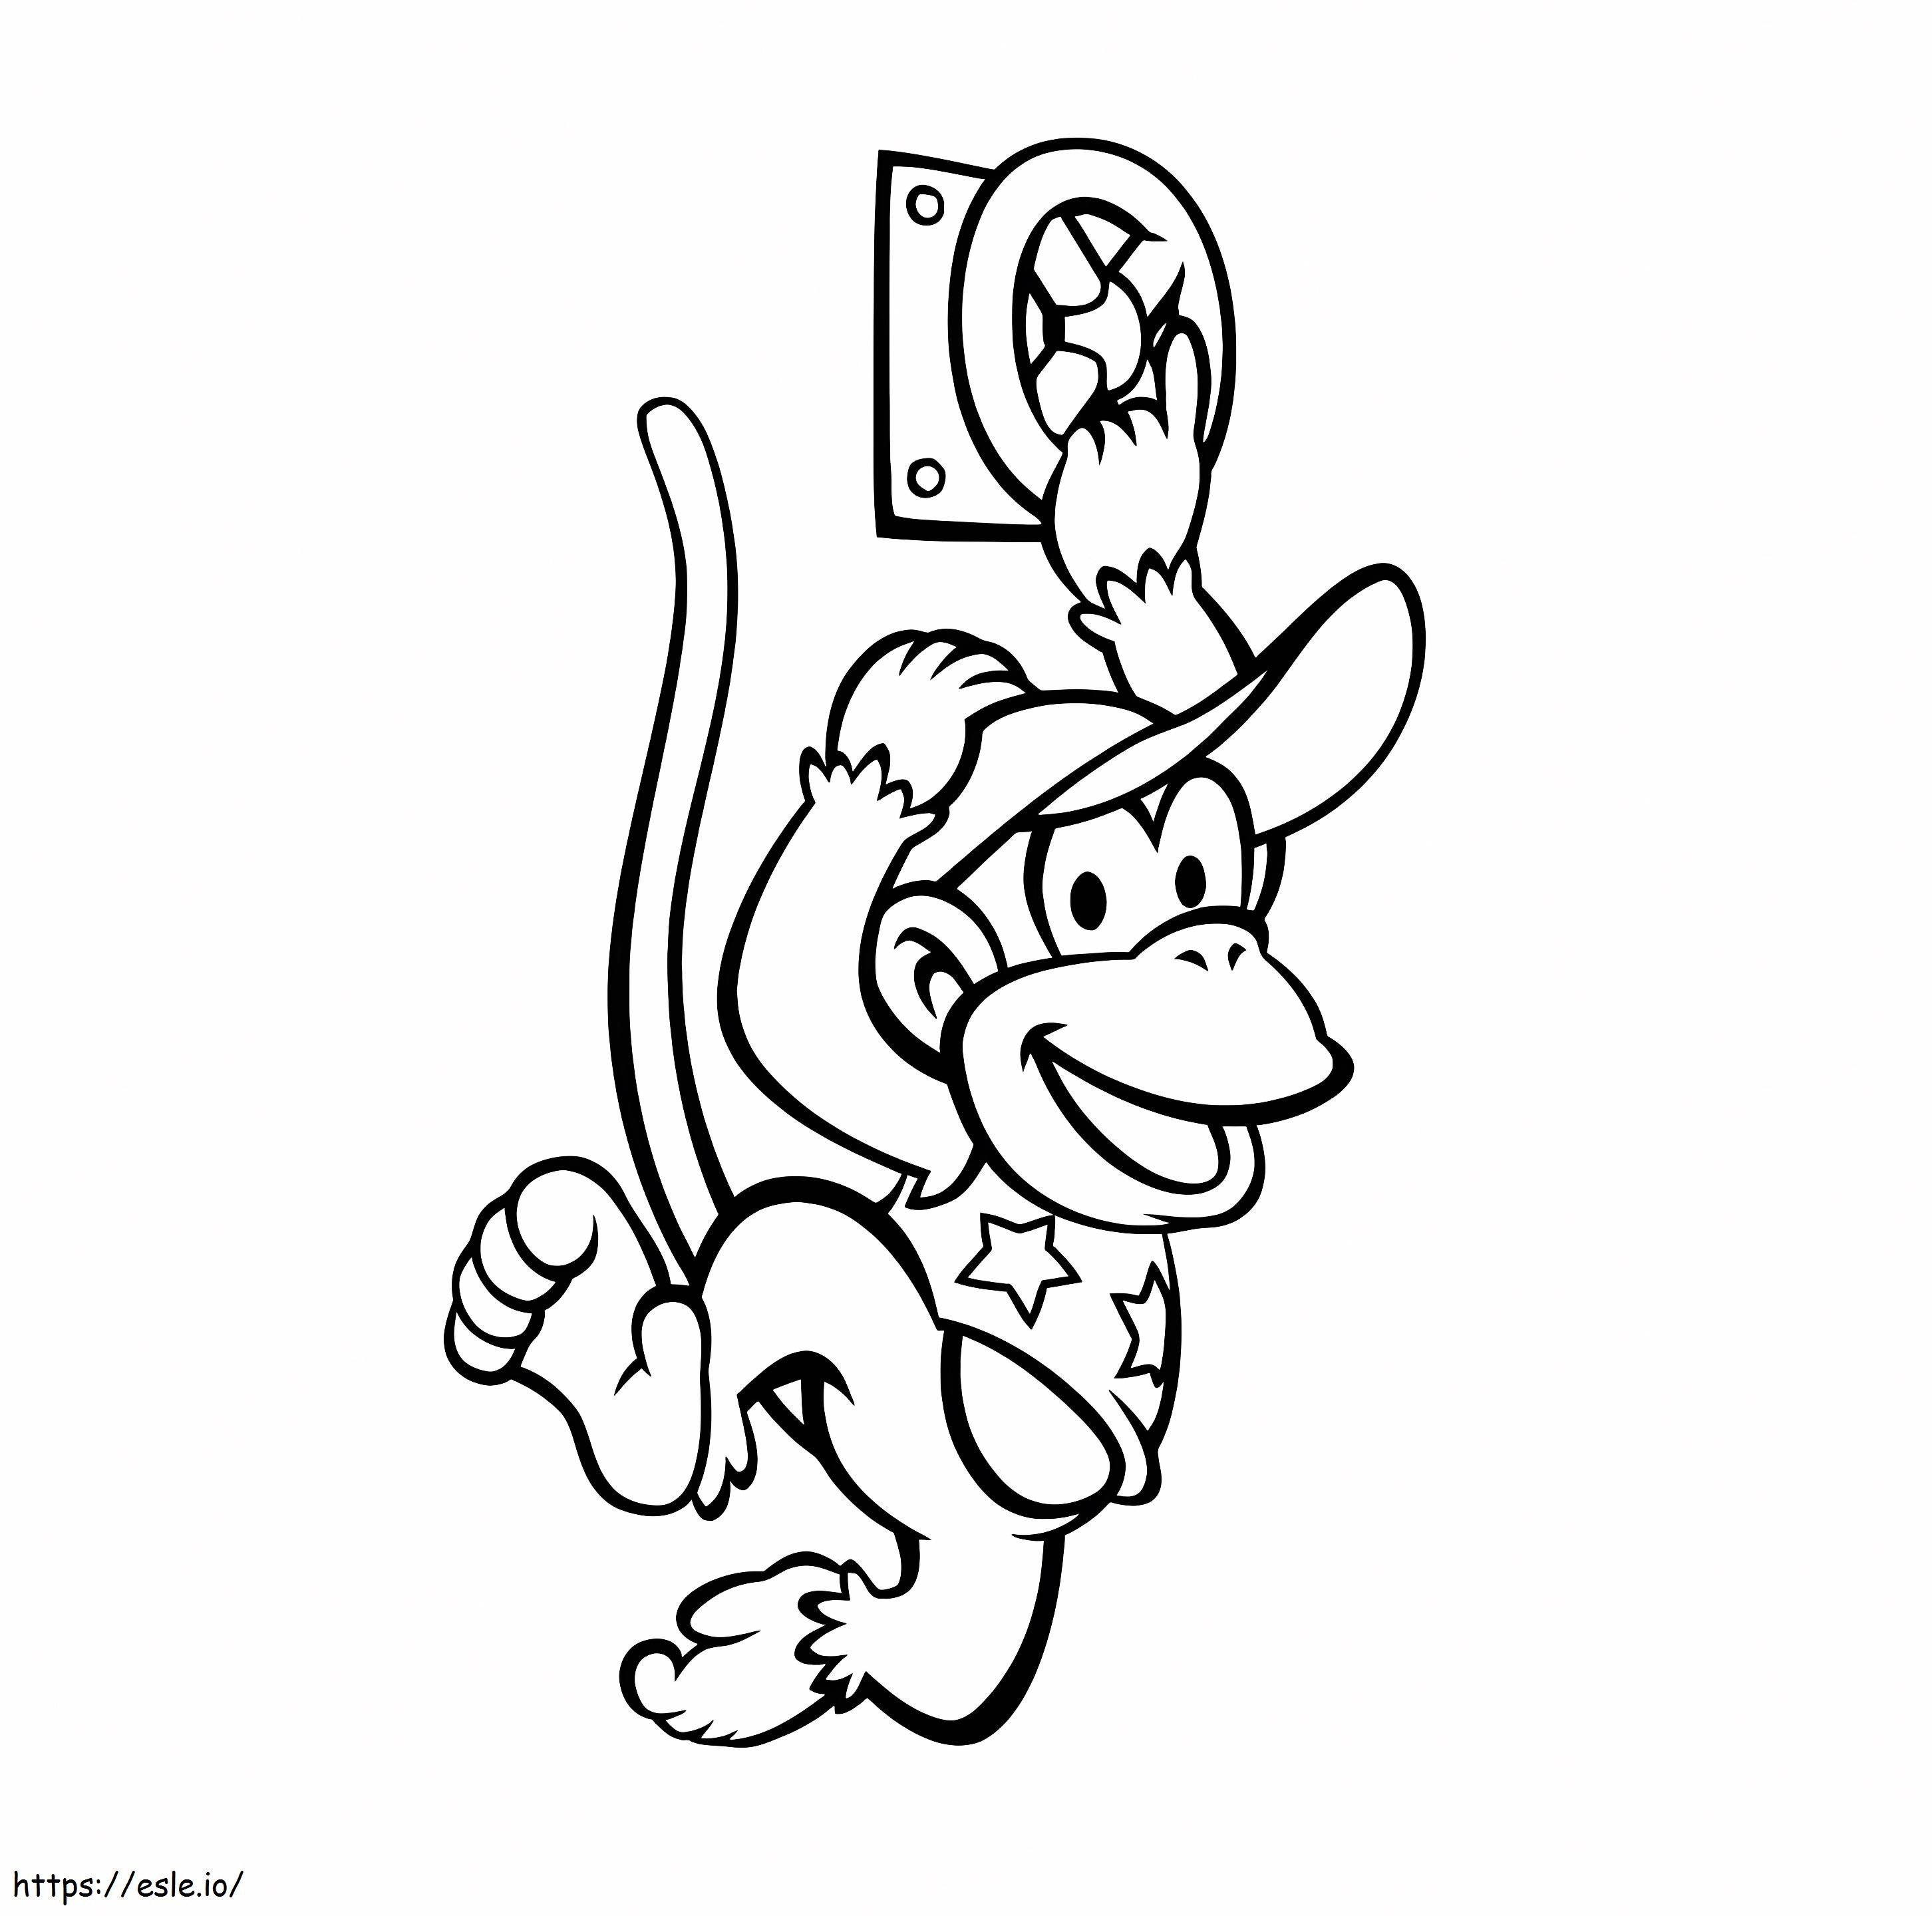 Jogo de Diddy Kong para colorir